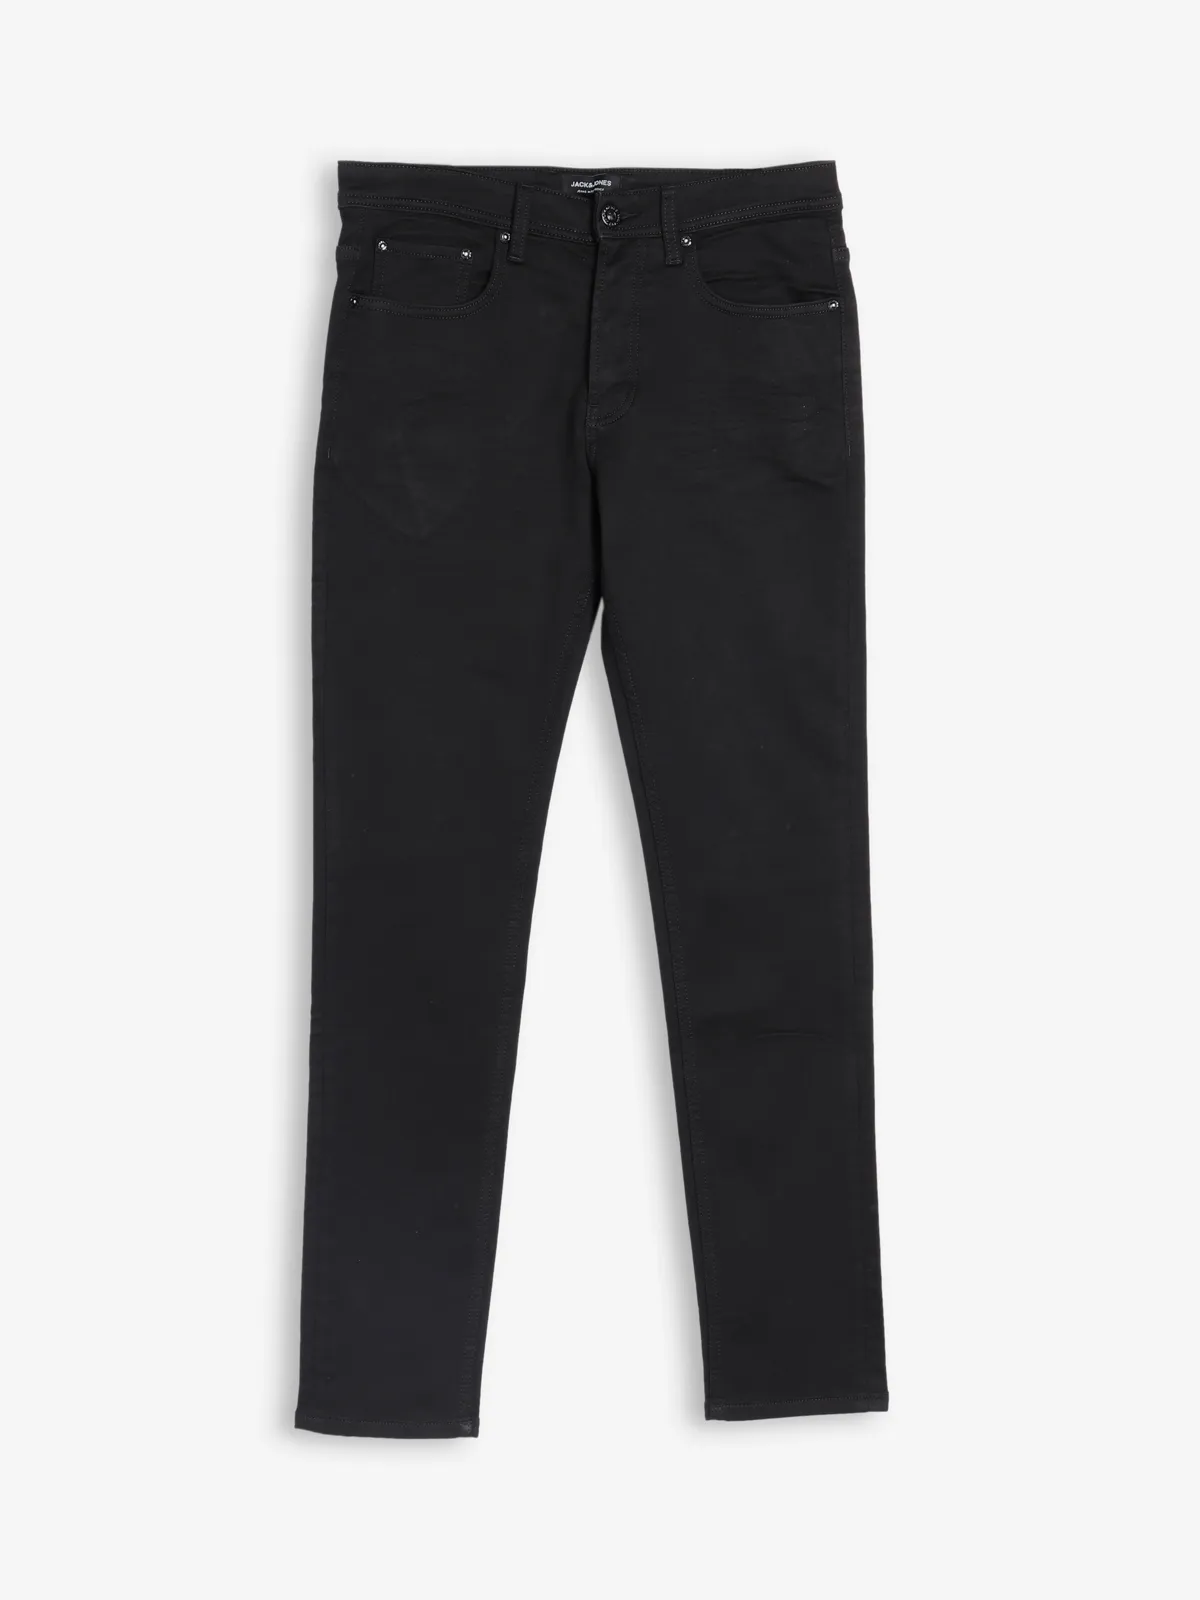 JACK&JONES solid black slim fit jeans